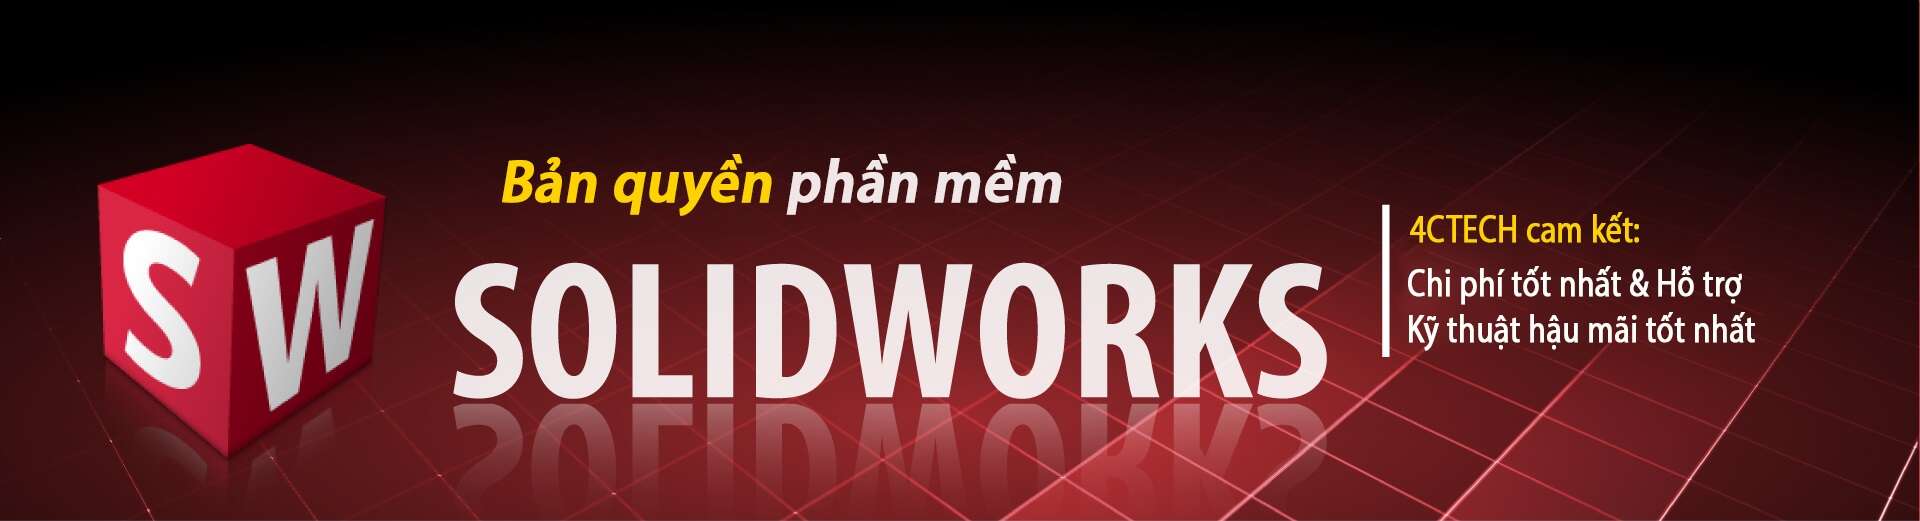 Phan mem Solidworks ban quyen Banner new